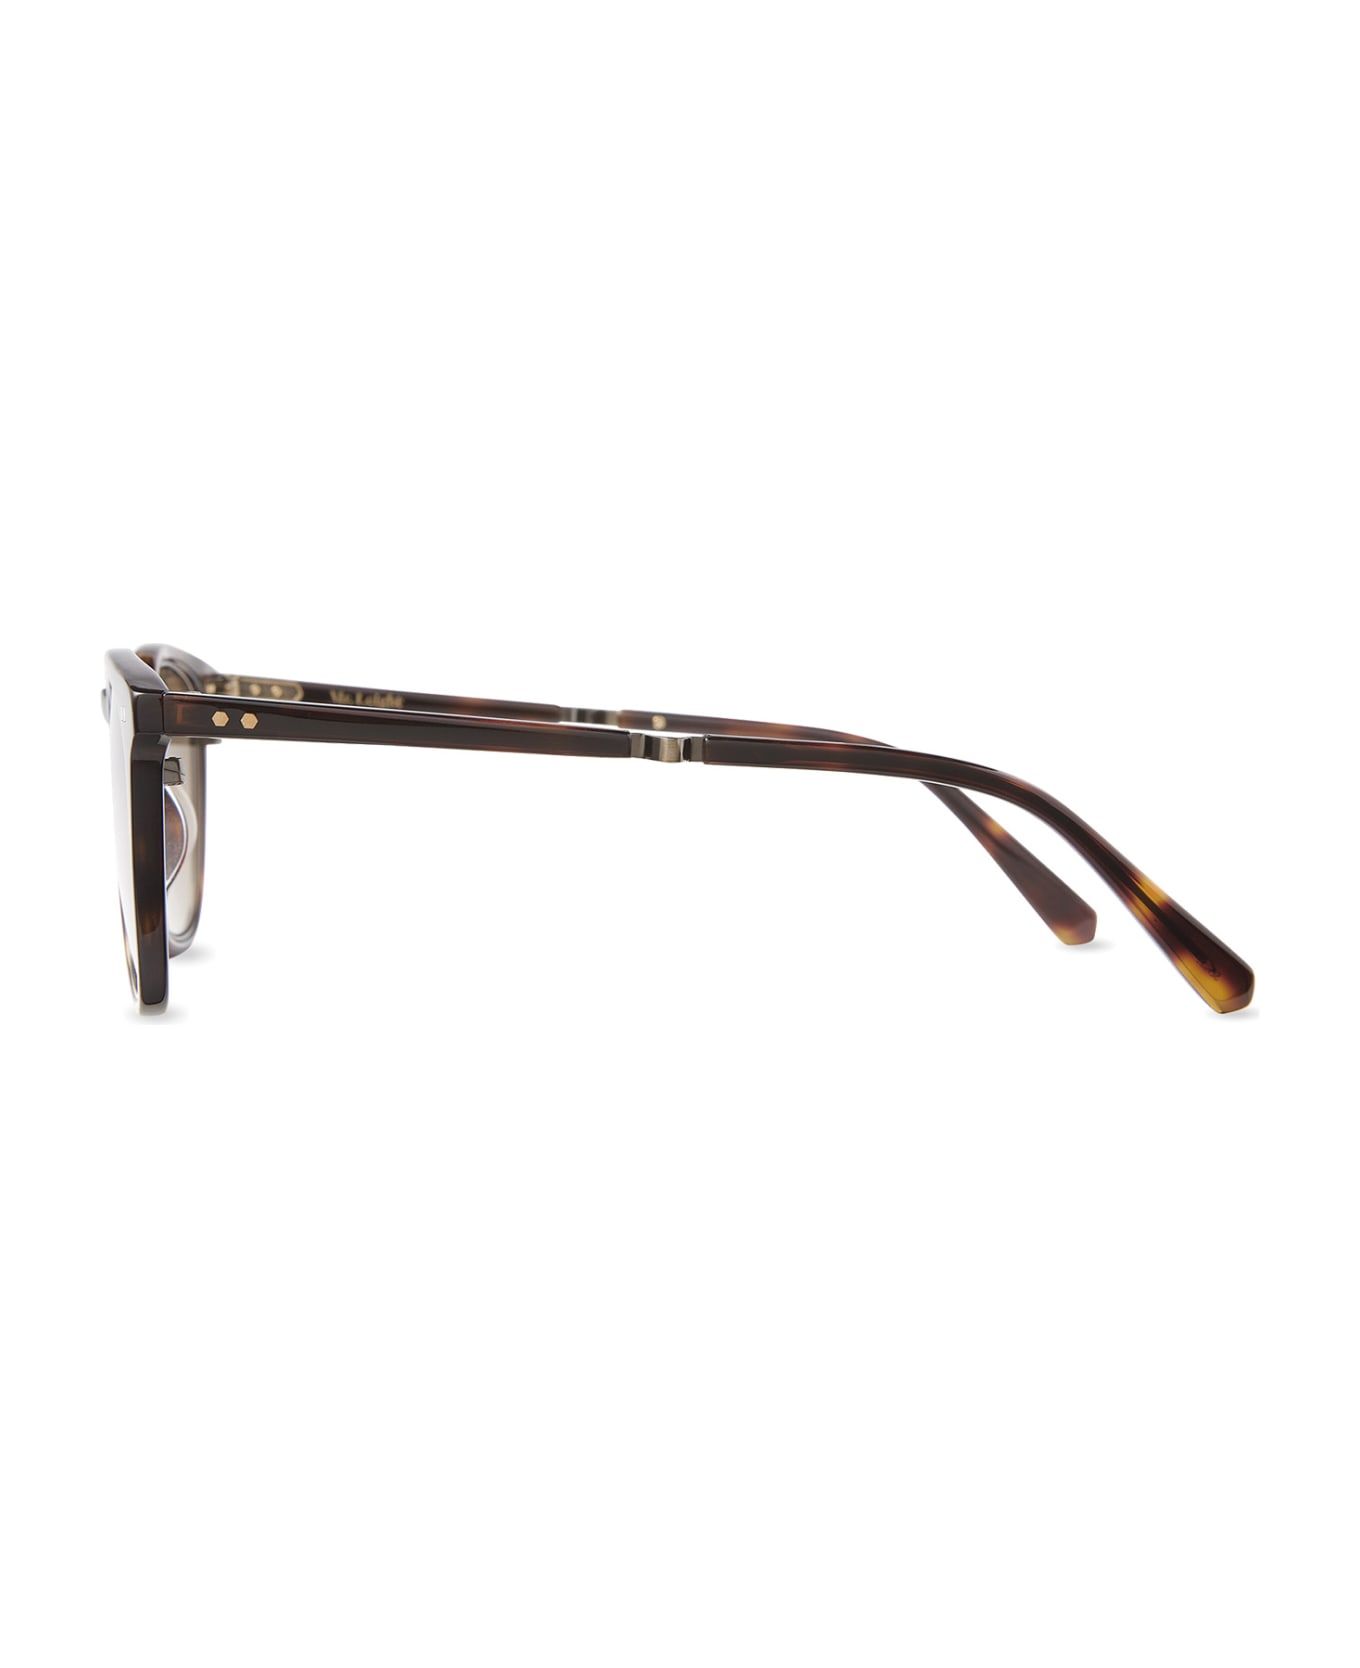 Mr. Leight Getty Ii S Honu Tortoise-antique Gold Sunglasses - Chloé Eyewear Poppy octagonal-frame sunglasses